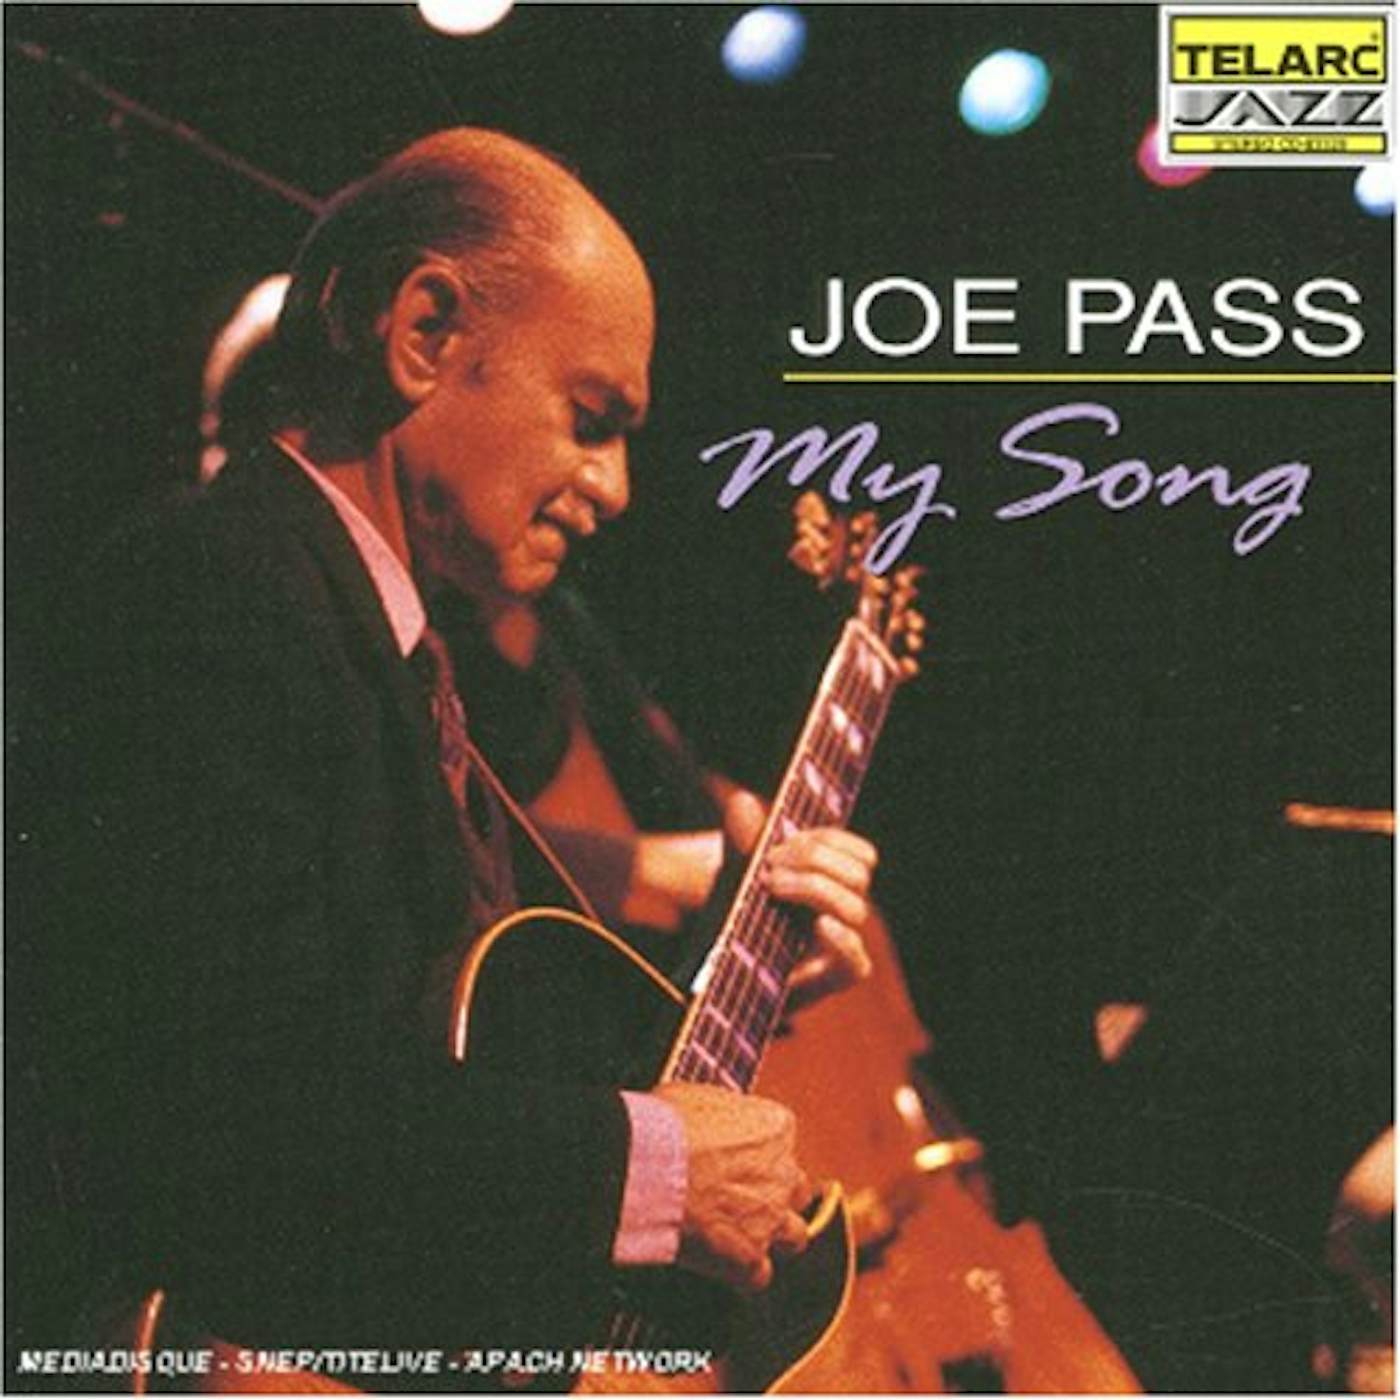 Joe Pass MY SONG CD